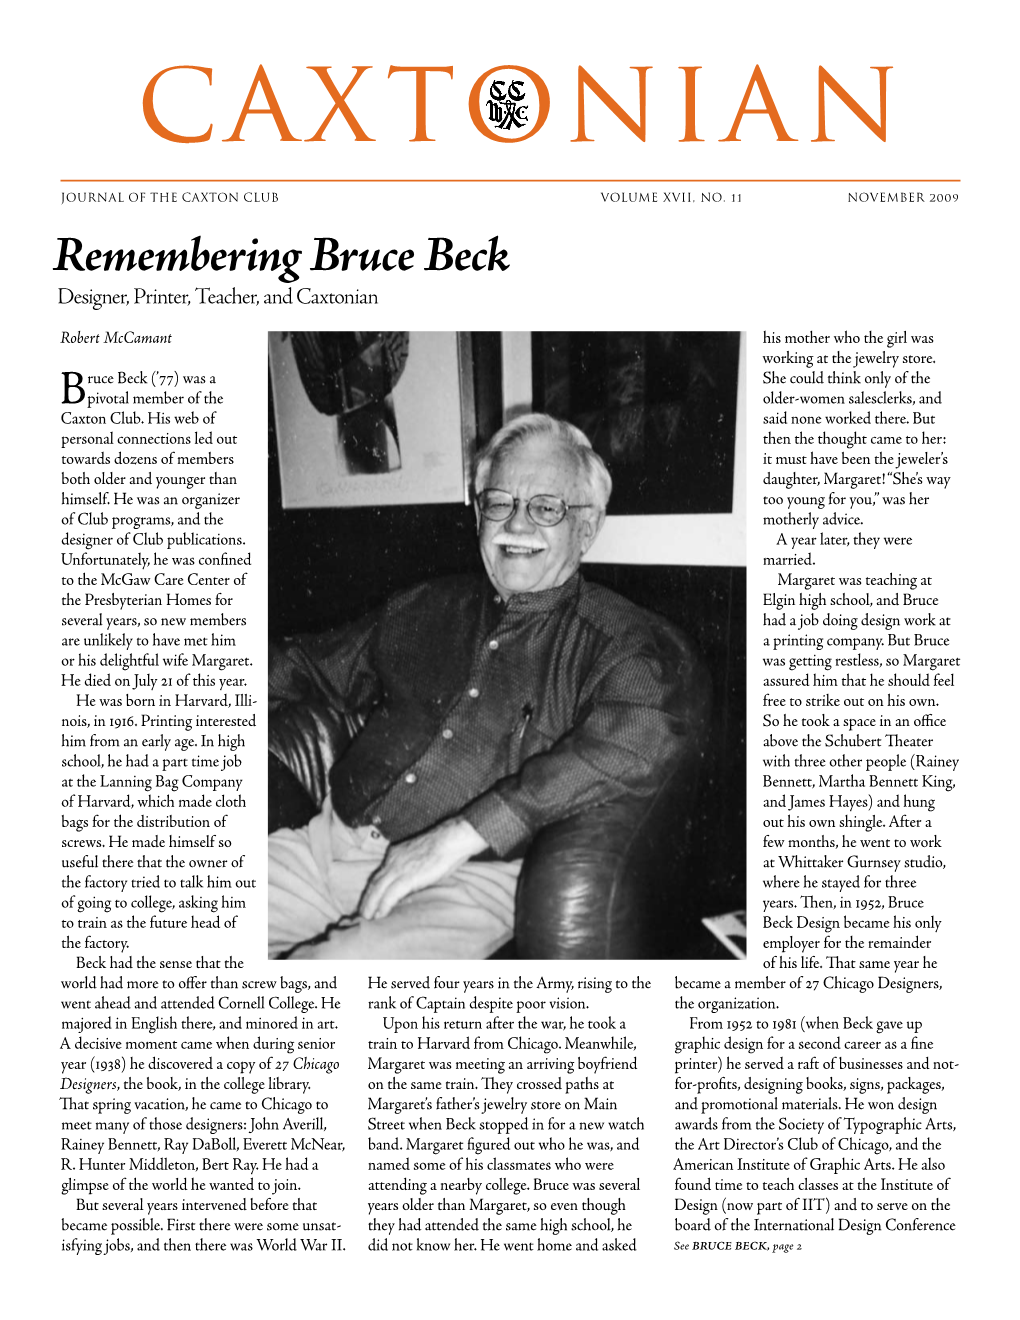 Remembering Bruce Beck Designer, Printer, Teacher, and Caxtonian